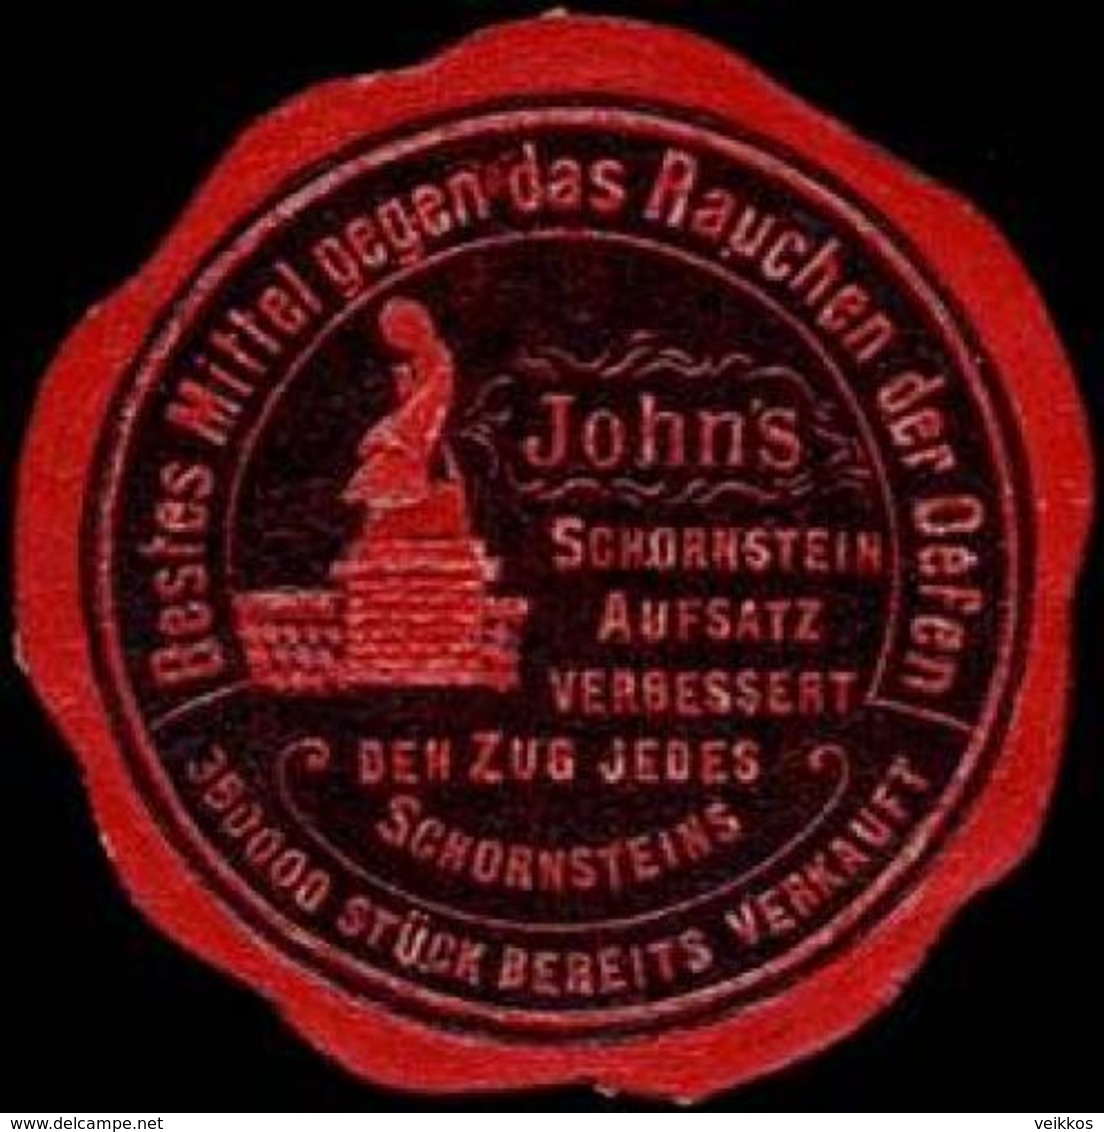 J.A. John AG: Johns Schornstein Aufsatz Reklamemarke - Cinderellas